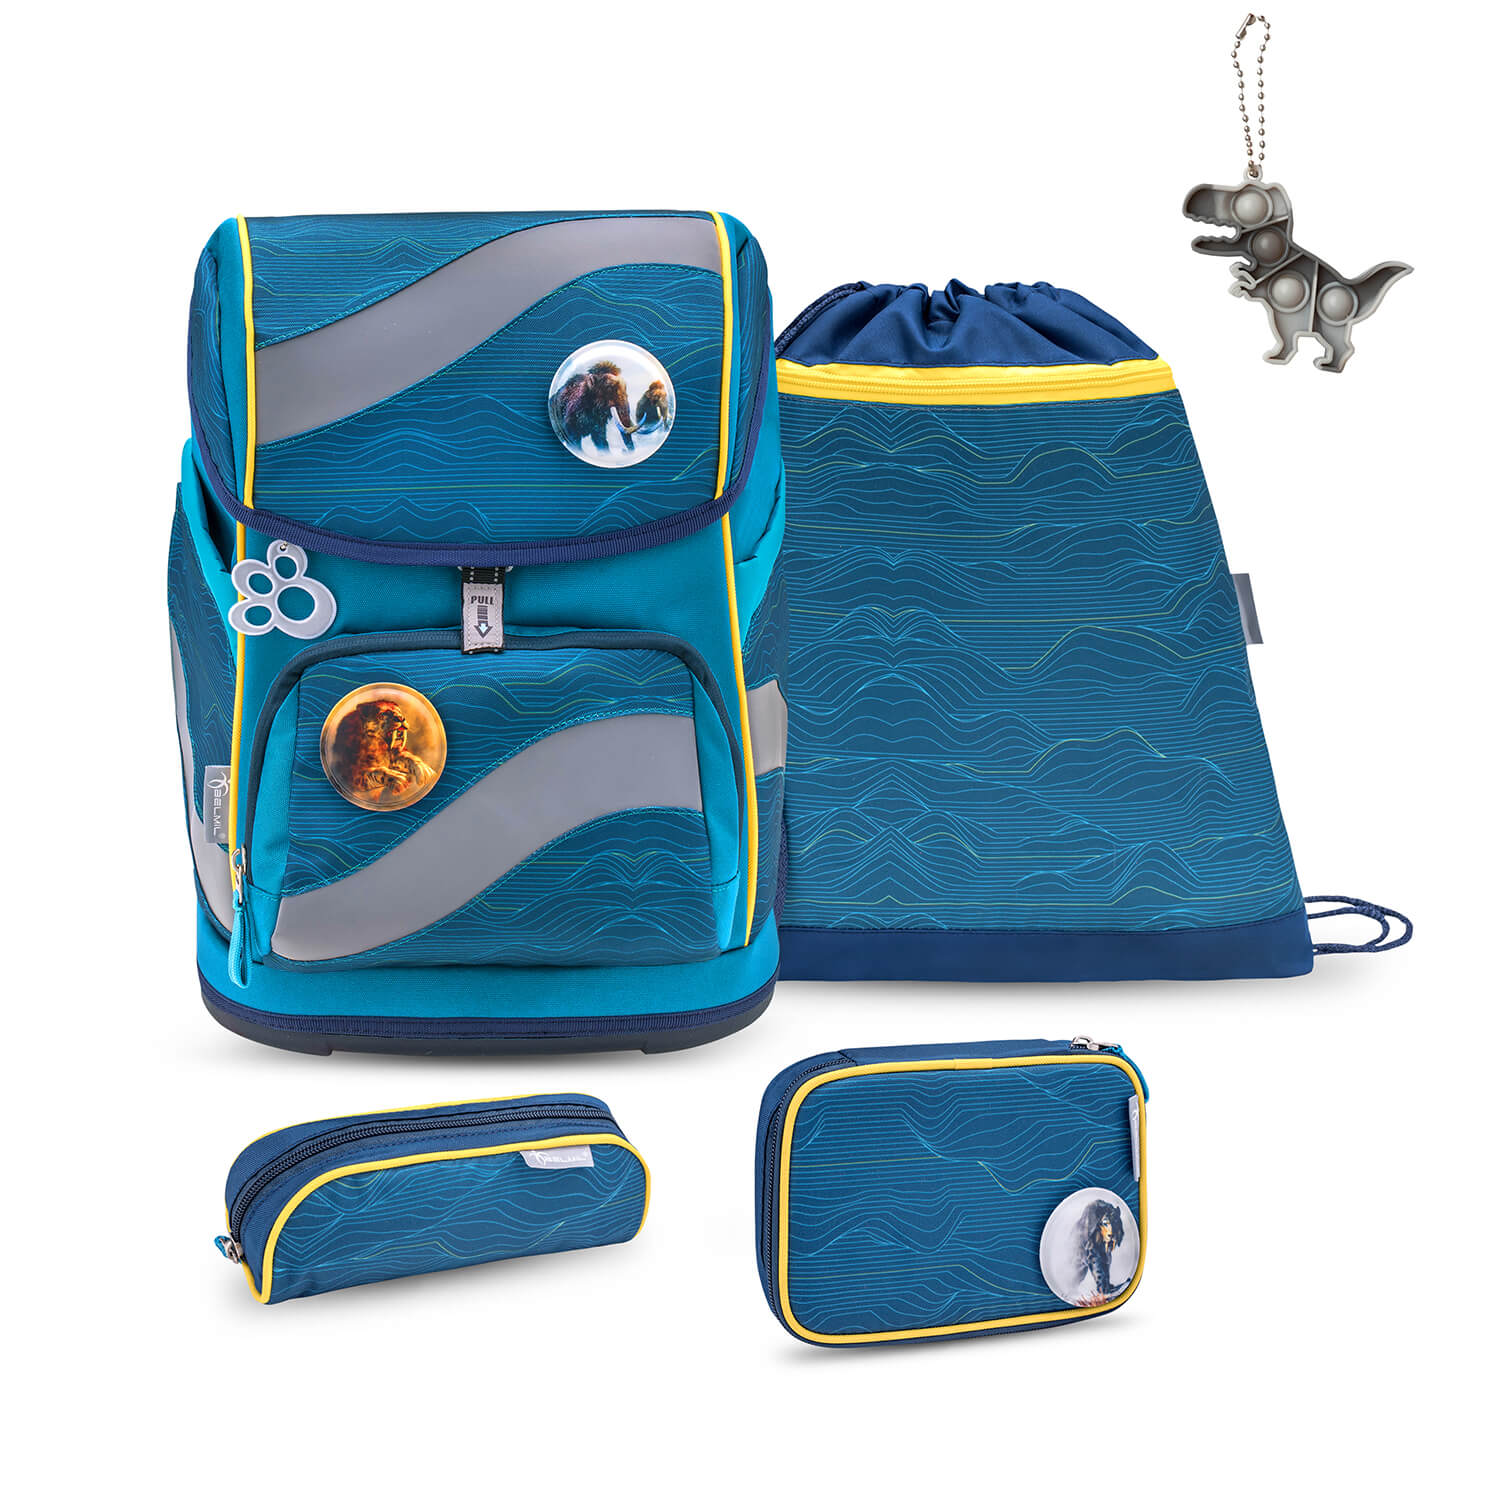 Smarty Waves Orange schoolbag set 6 pcs with GRATIS keychain